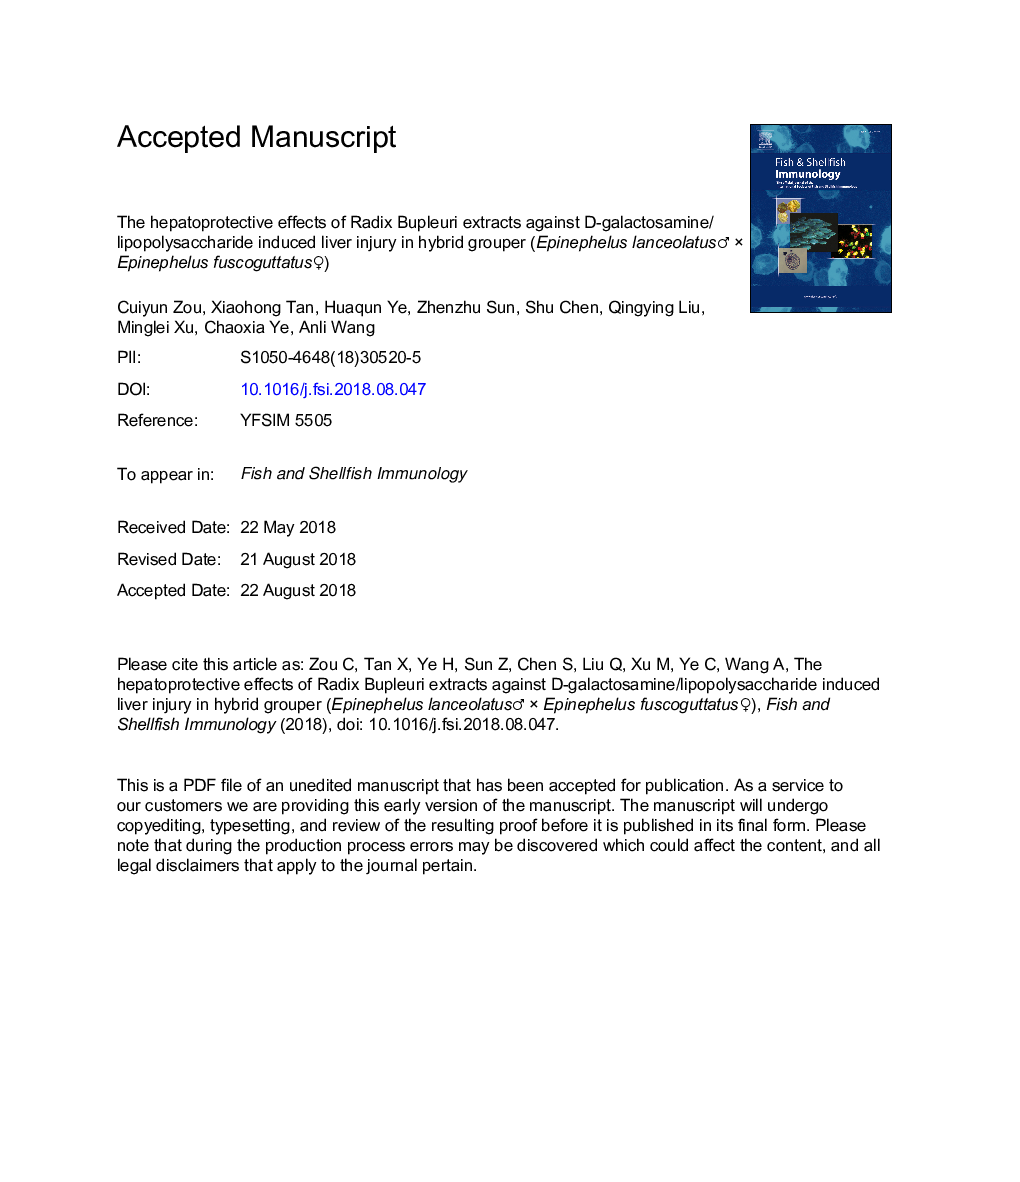 The hepatoprotective effects of Radix Bupleuri extracts against D-galactosamine/lipopolysaccharide induced liver injury in hybrid grouper (Epinephelus lanceolatusâ Ã Epinephelus fuscoguttatusâ)